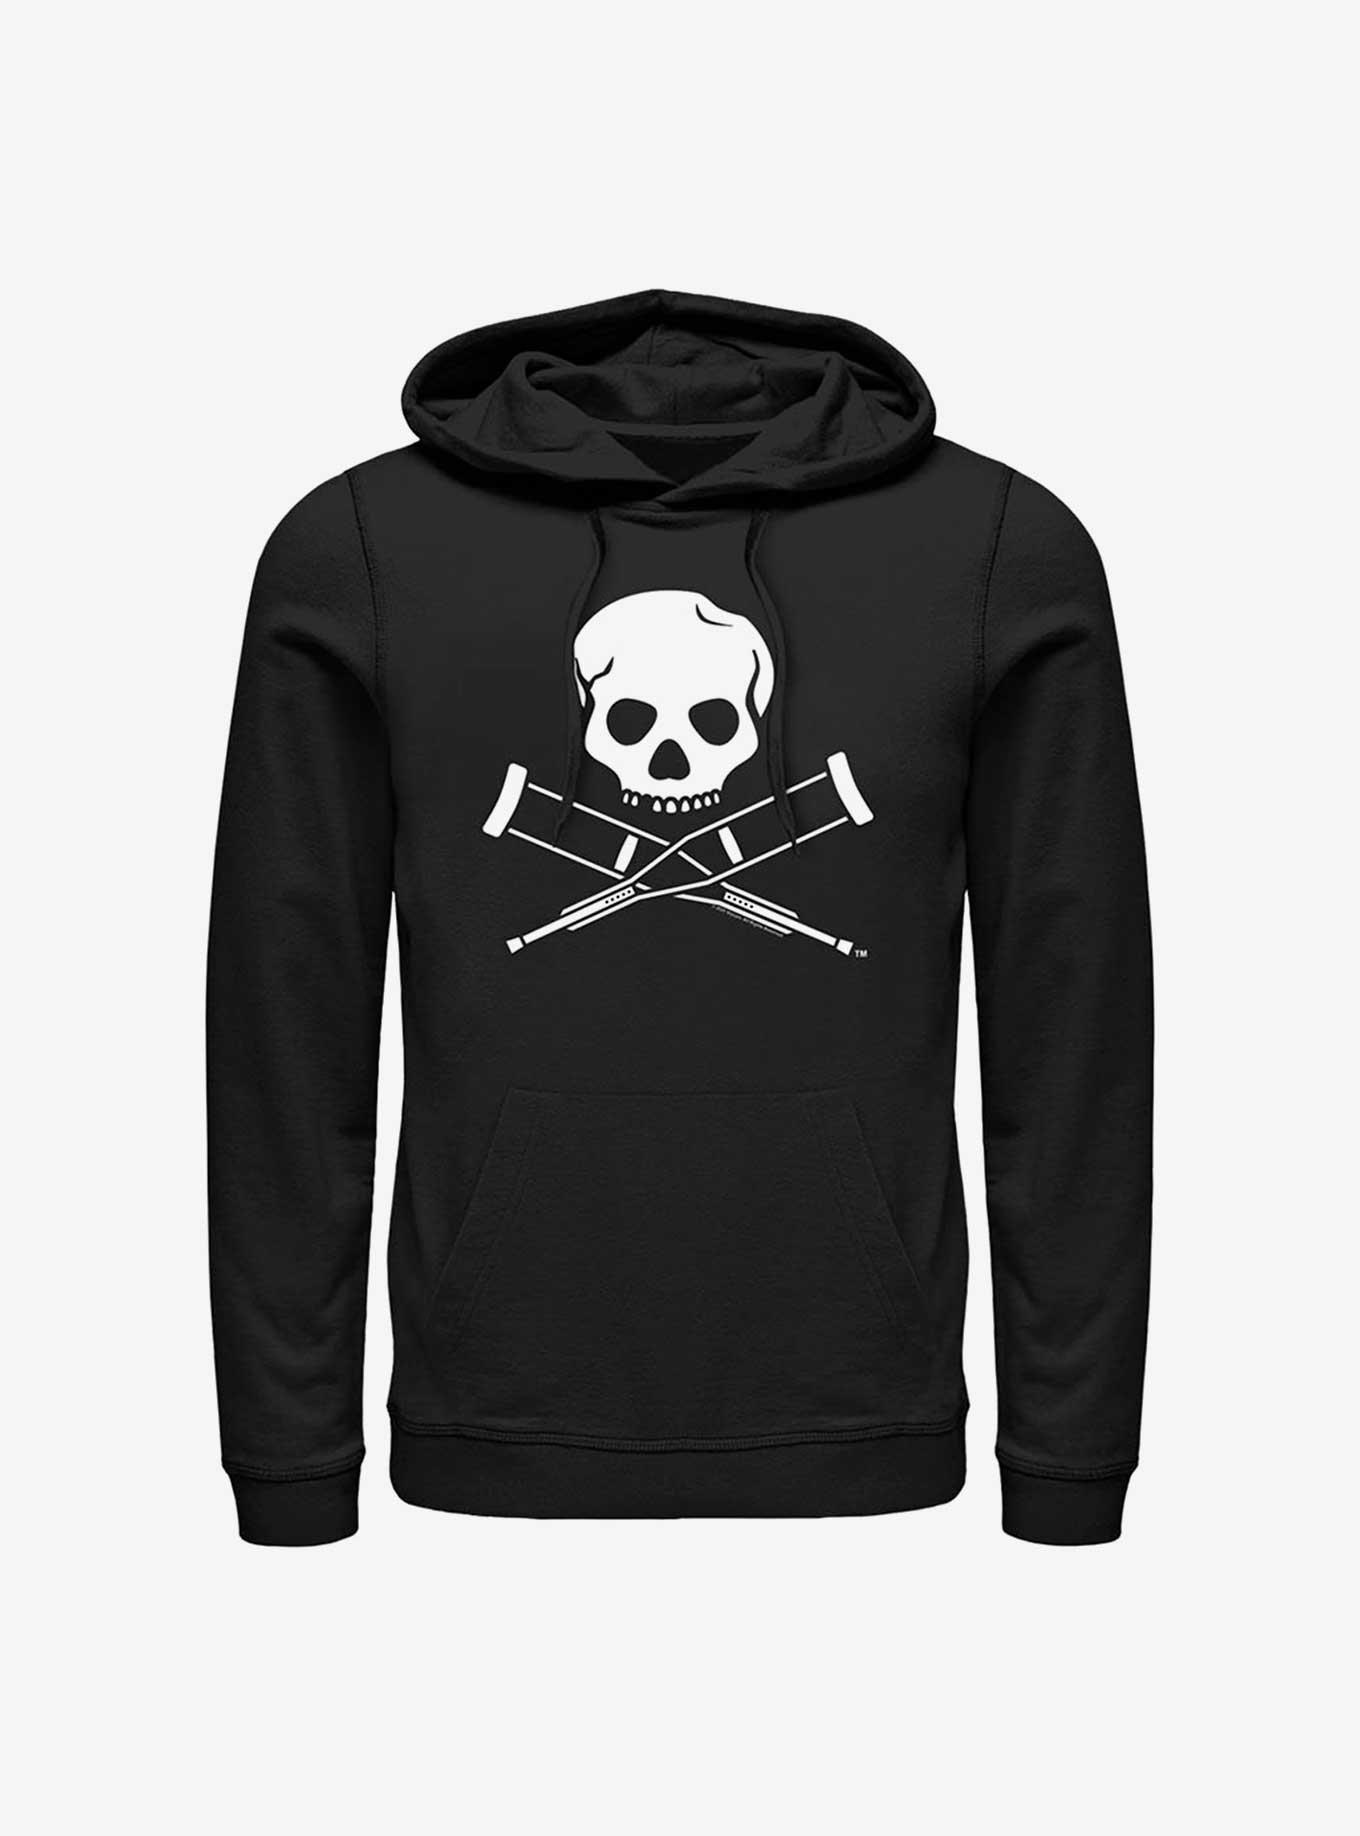 Pirates of the Caribbean 5 Skull Logo Hoodie